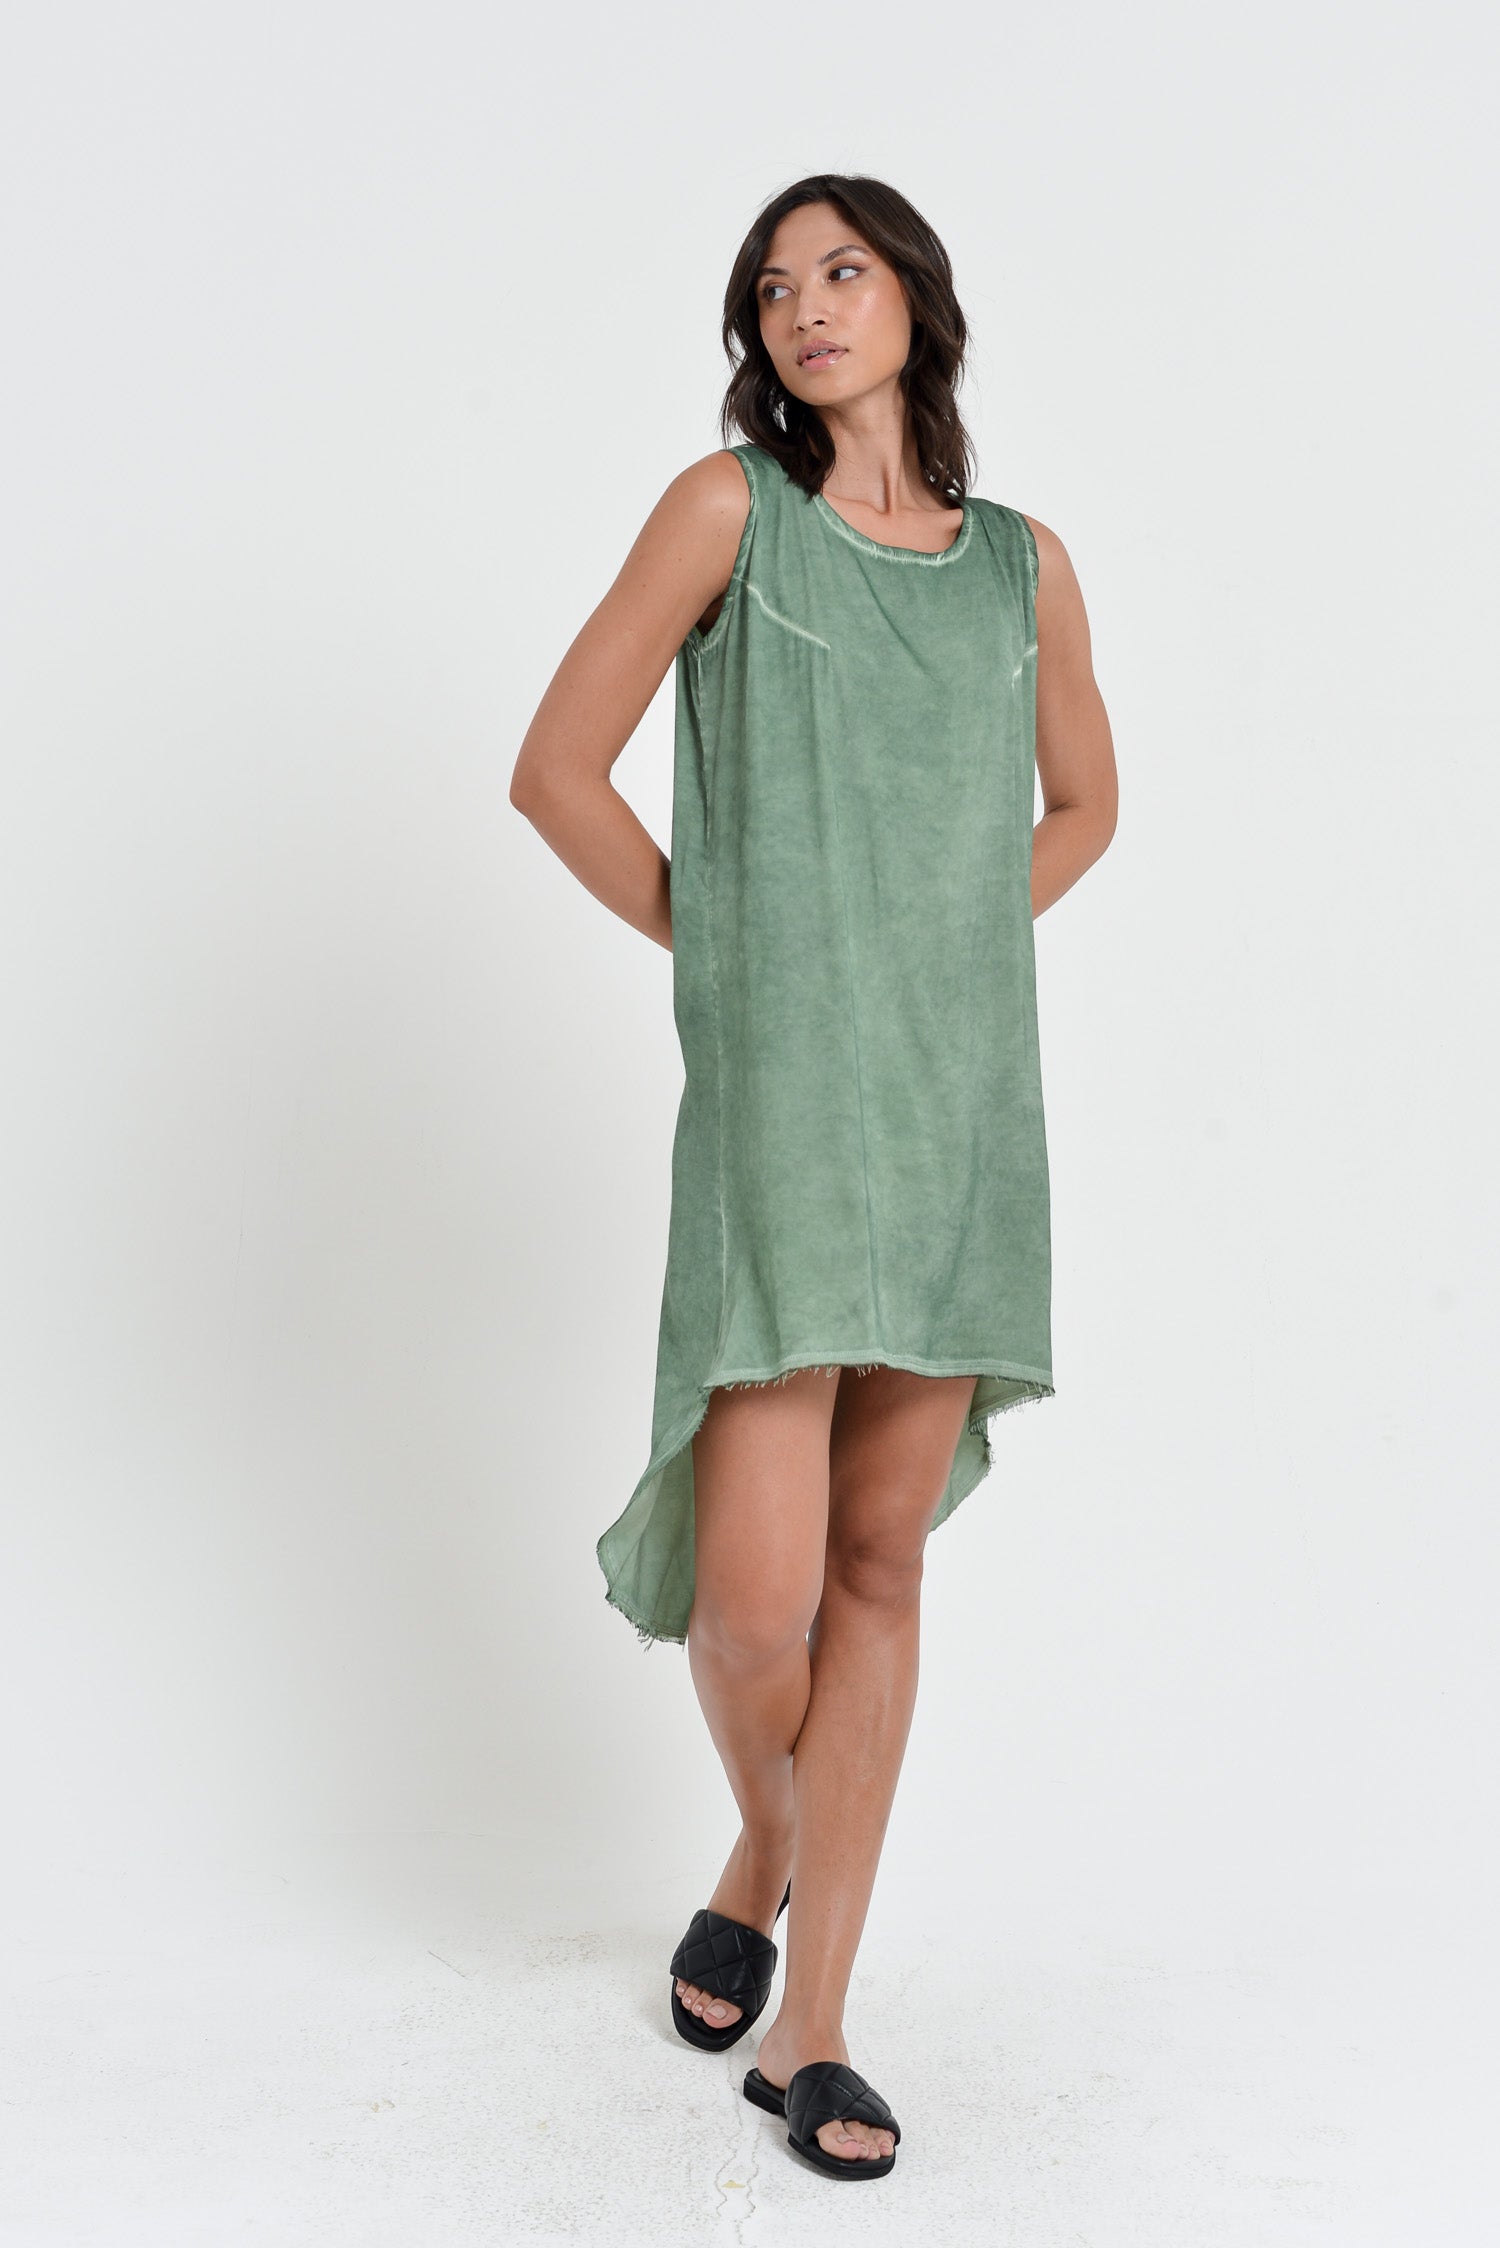 Tulip Dress - Women's Sleeveless Long Back Satin Dress - Juniper